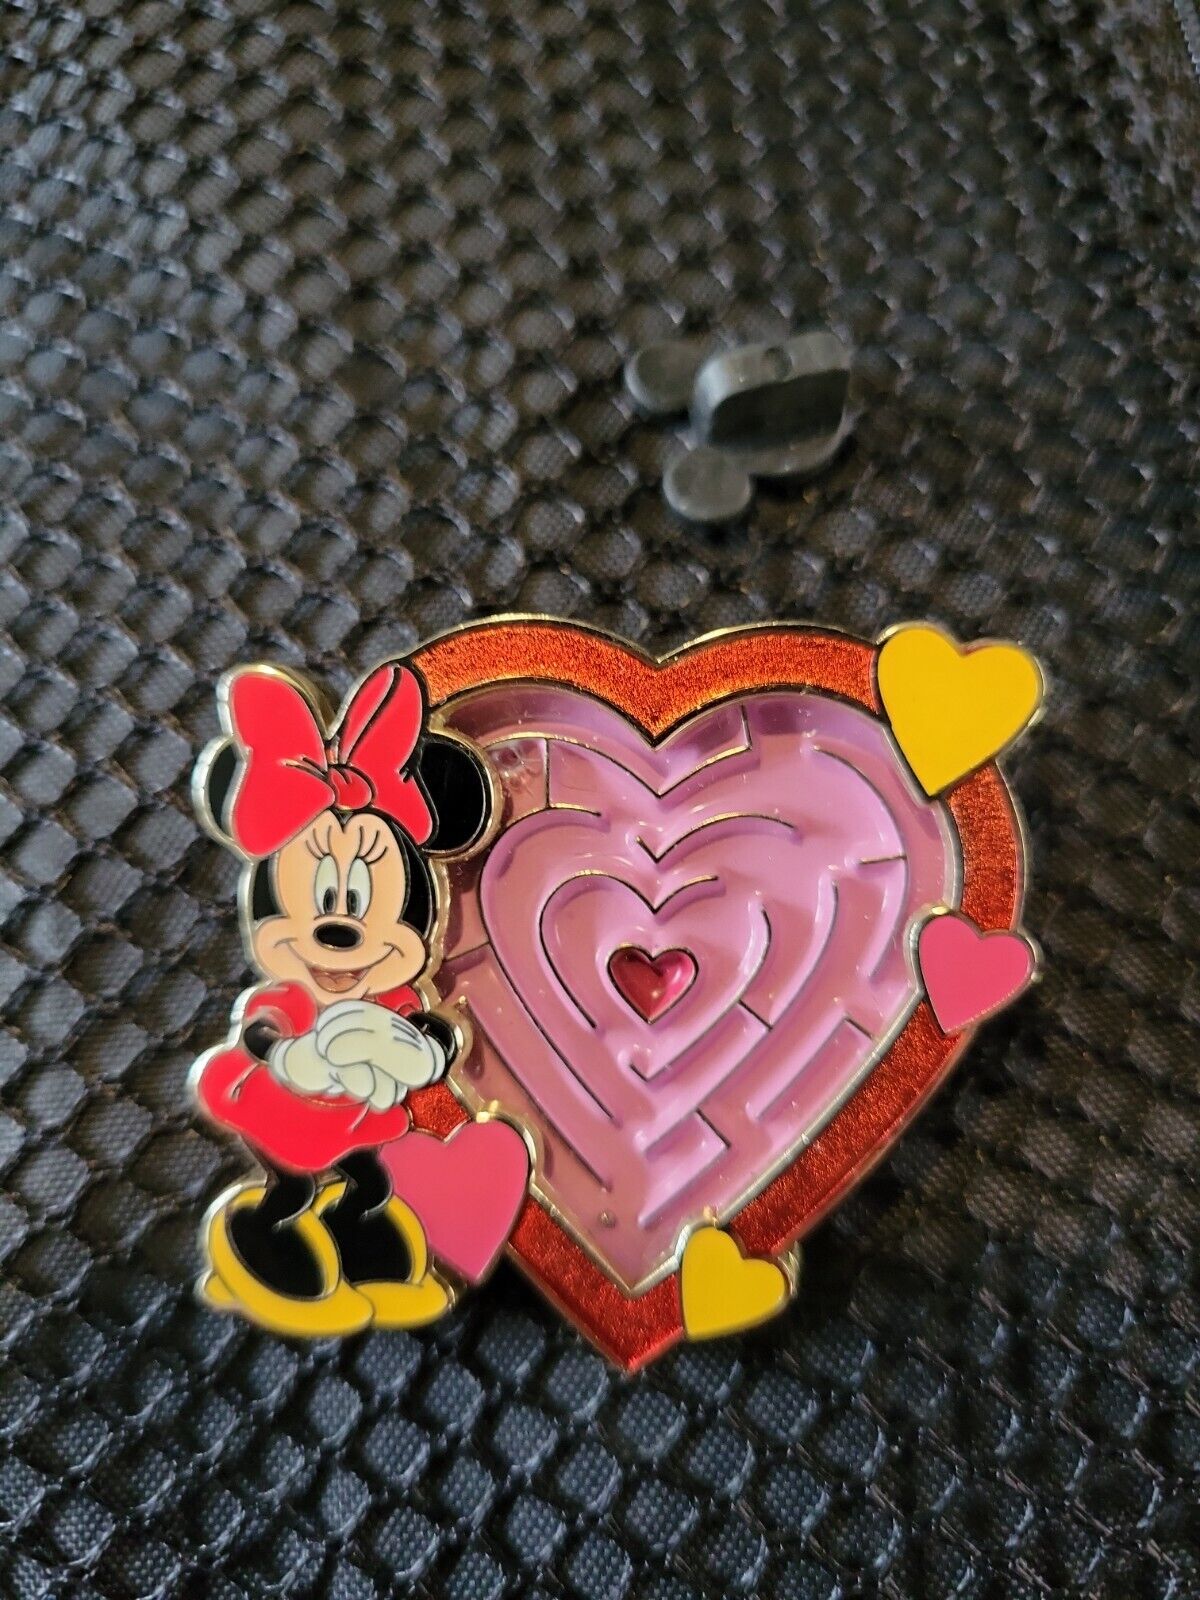 Disney HKDL Maze Game Pin Series - Minnie Mouse Heart Pin LE 426 / 500